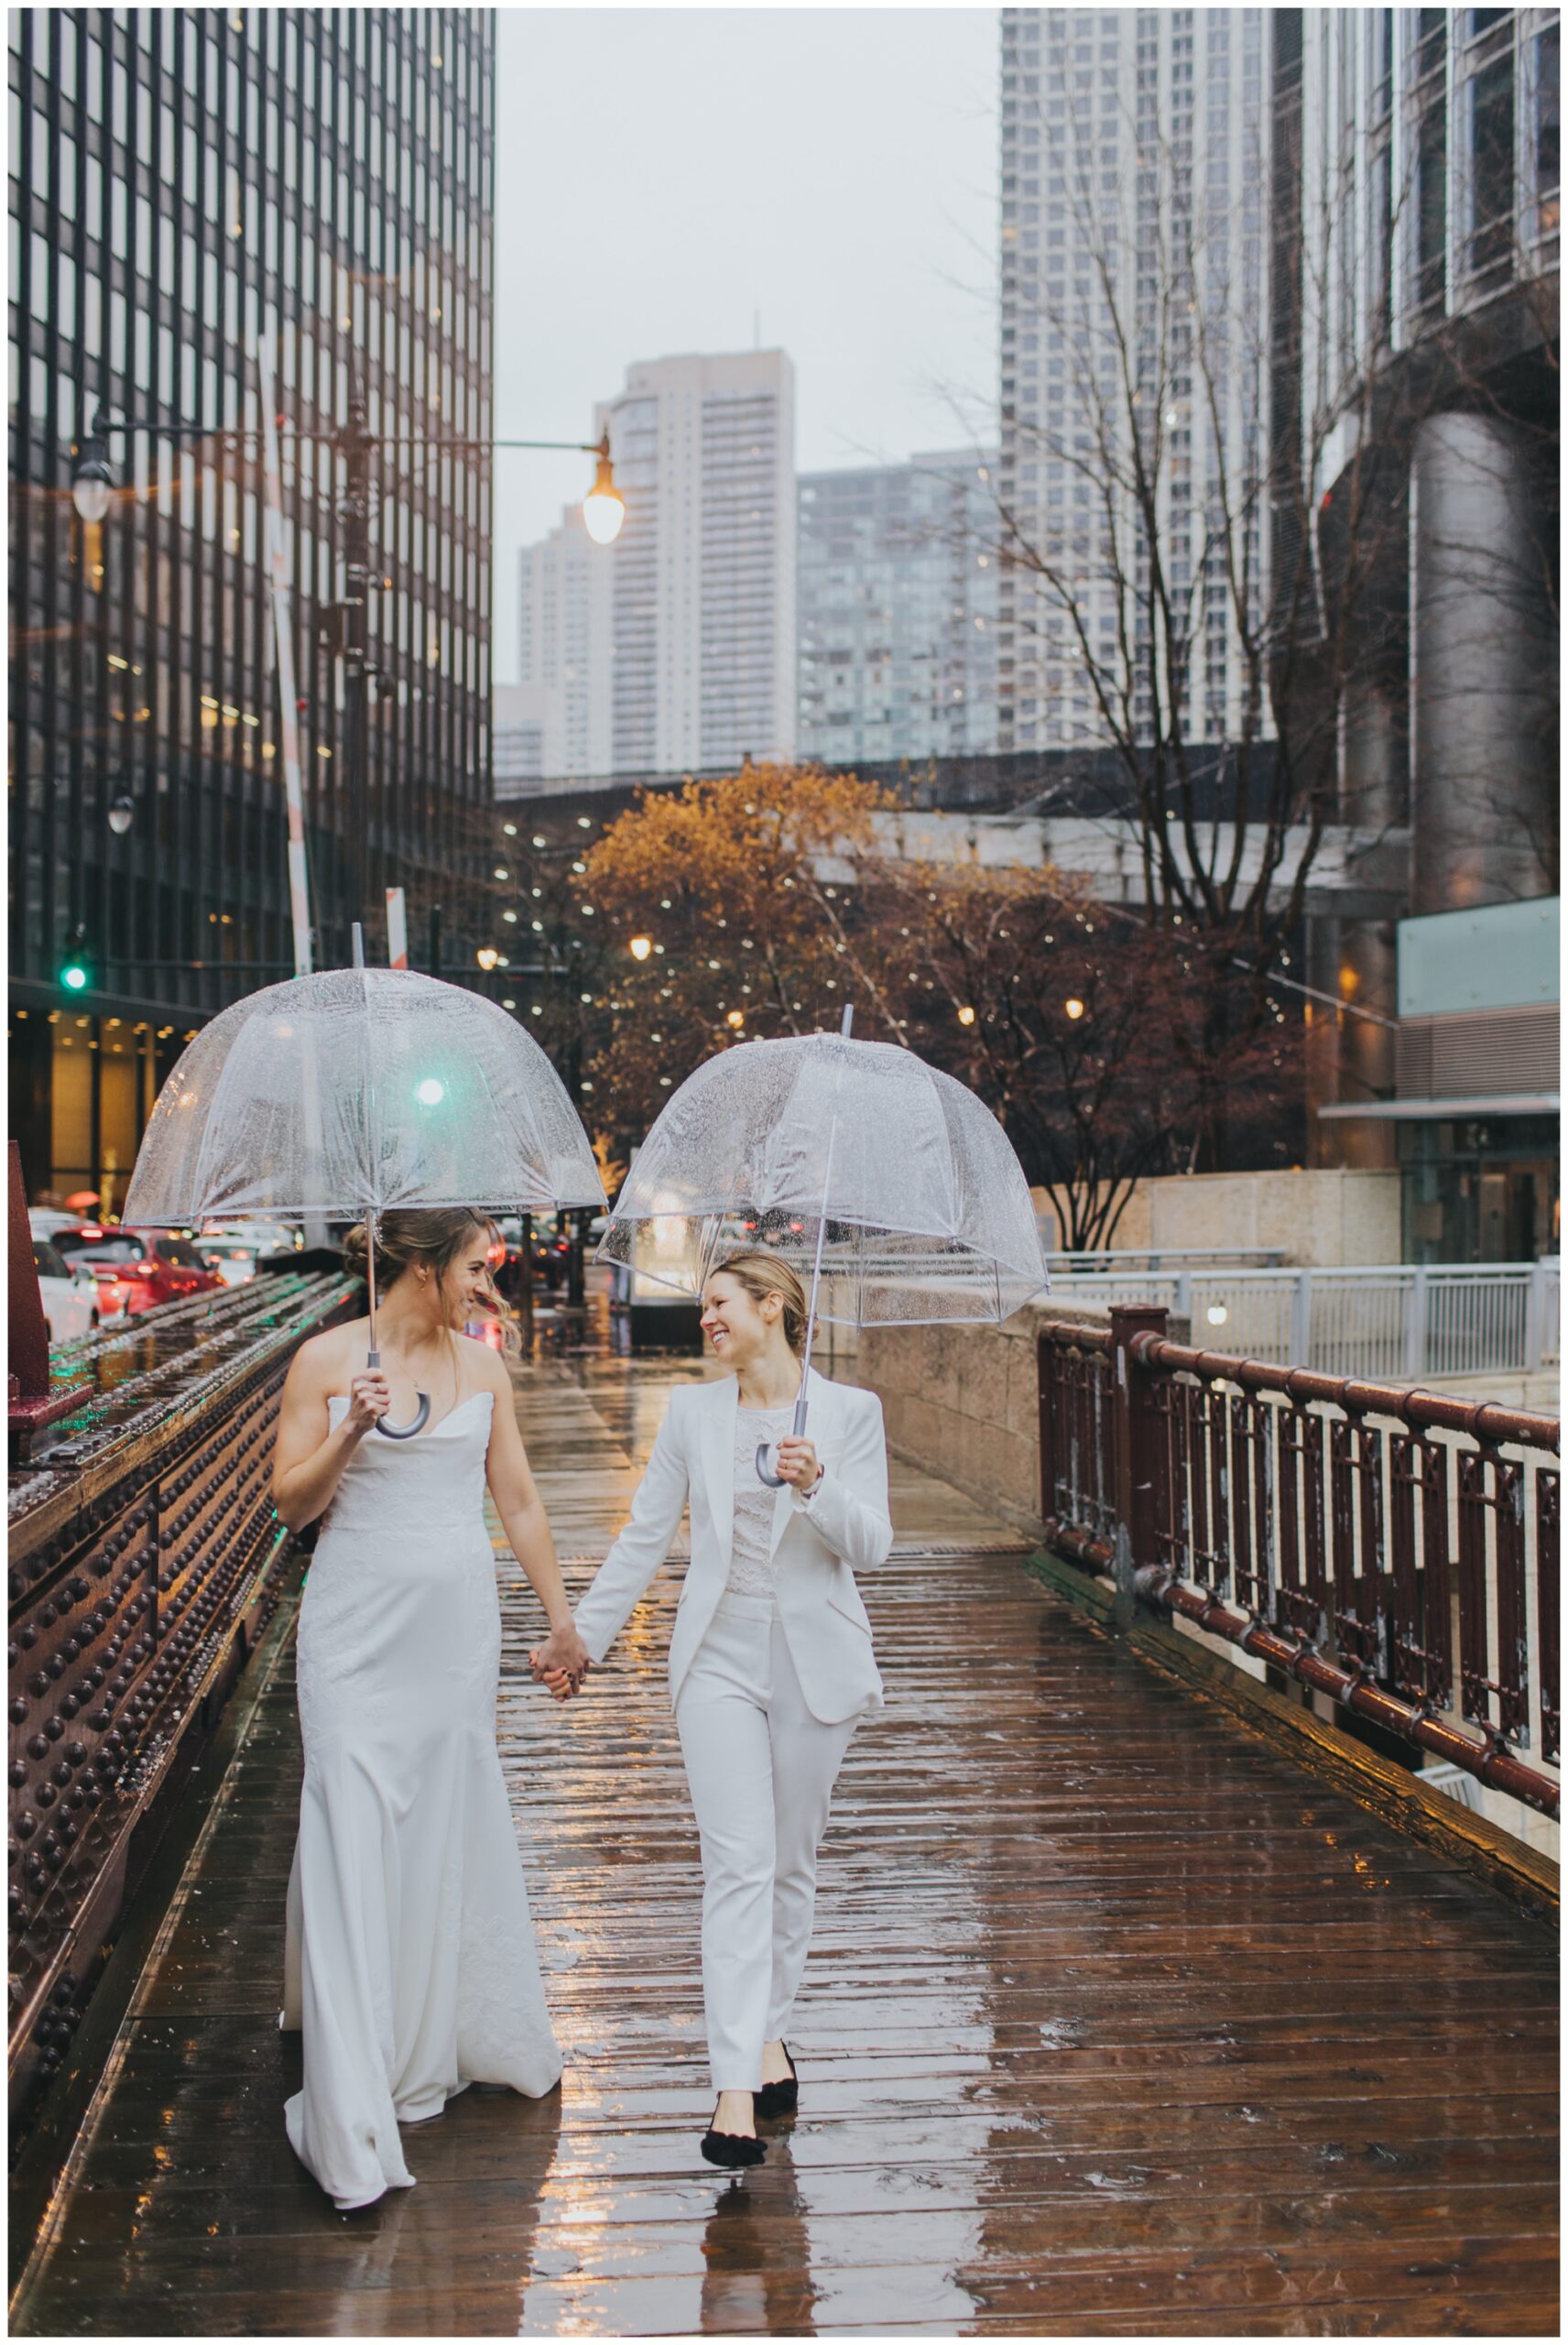 rainy day wedding; eloping in the rain; photos by Meg Adamik Creative